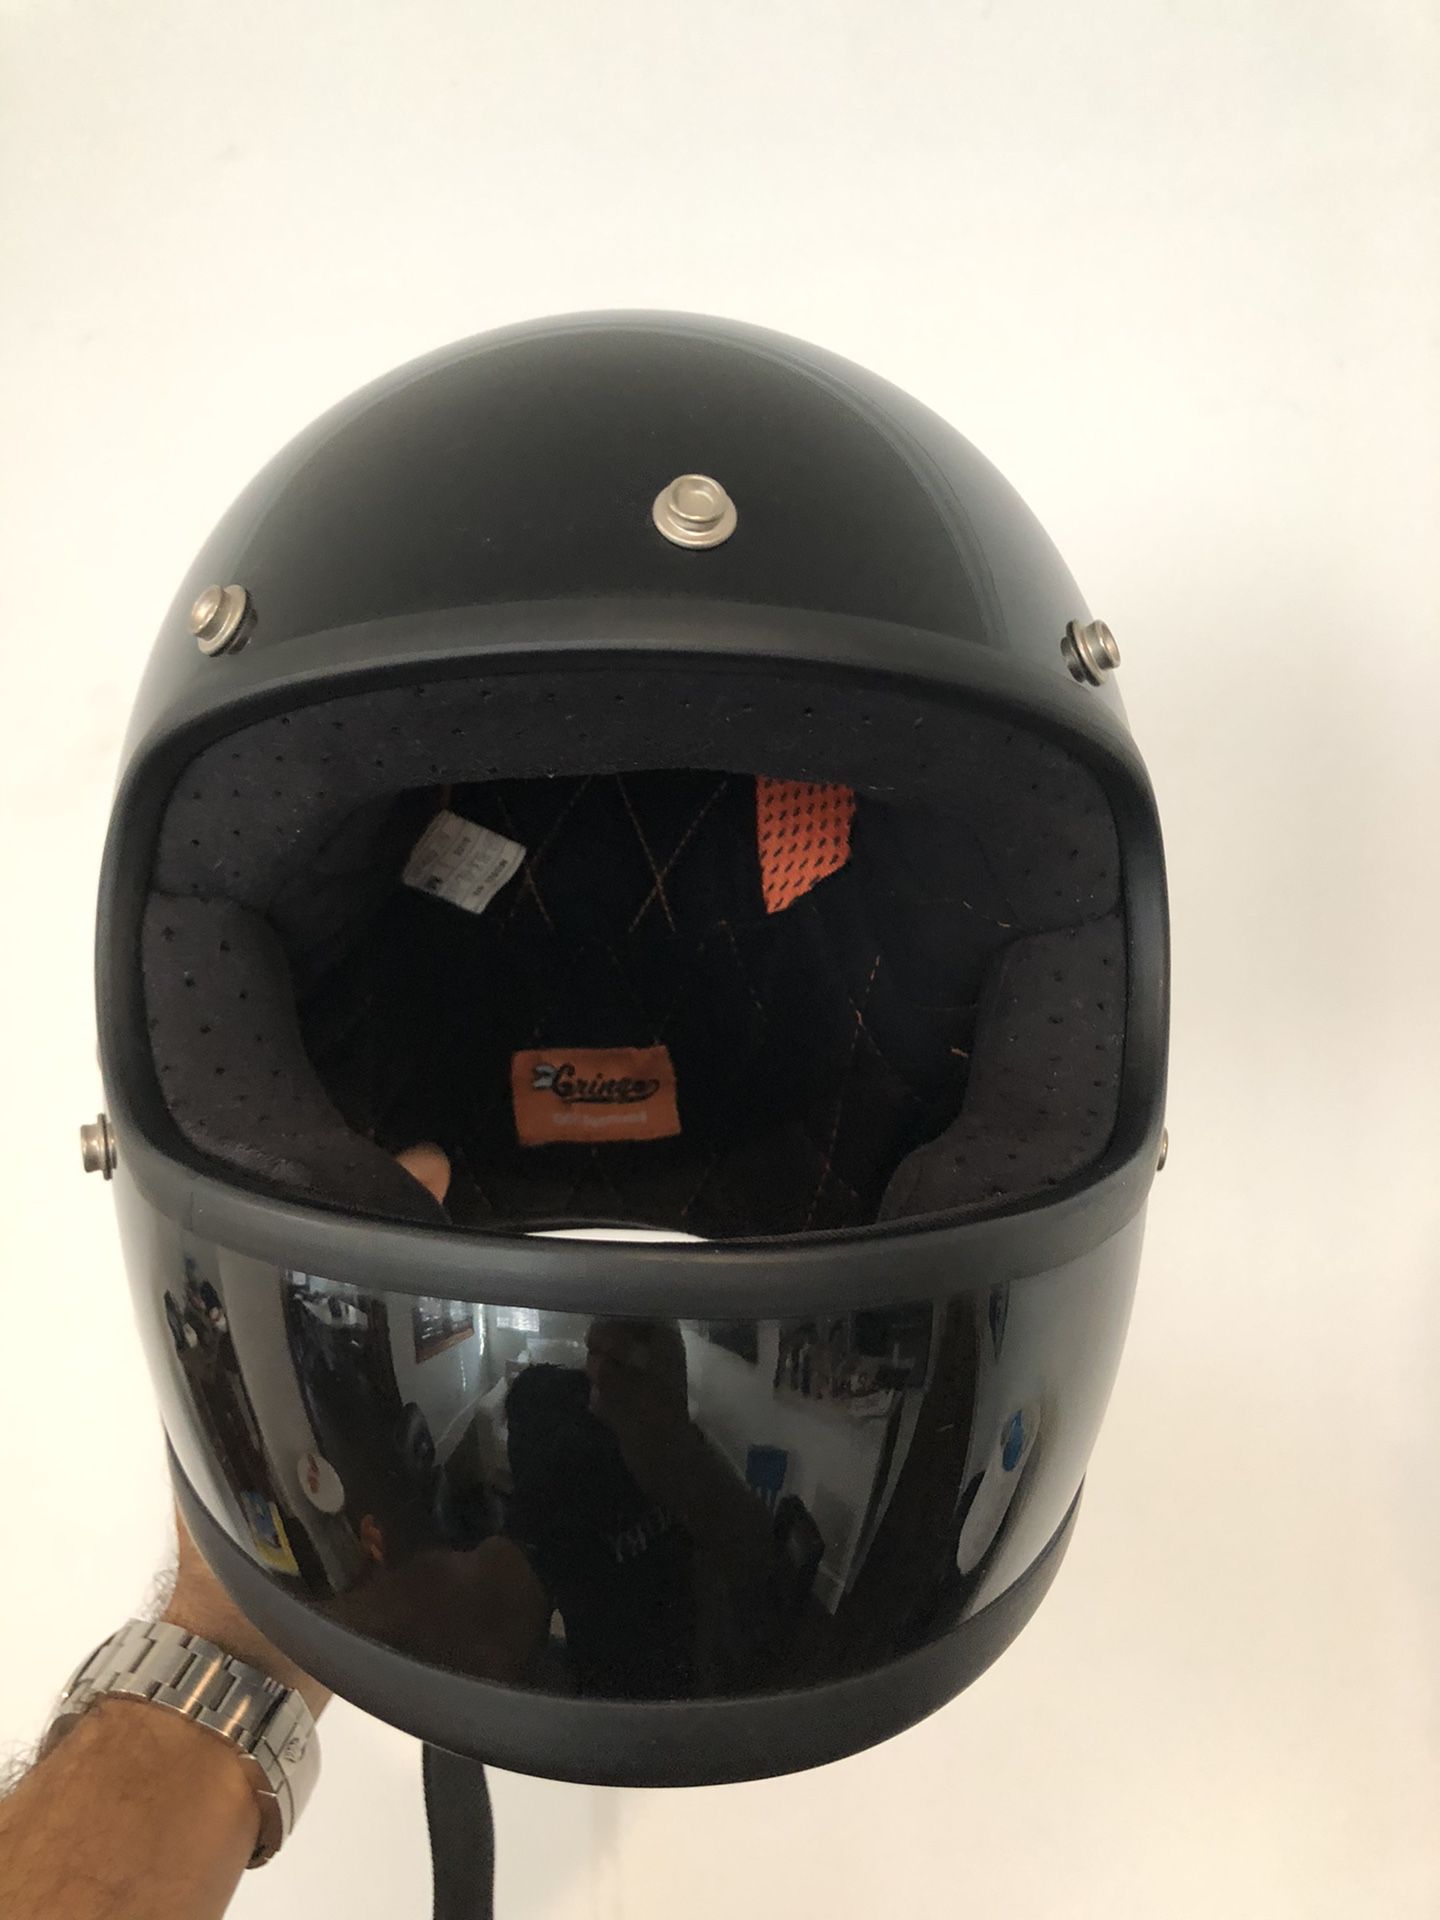 Bolt well INC Gringo motorcycle helmet